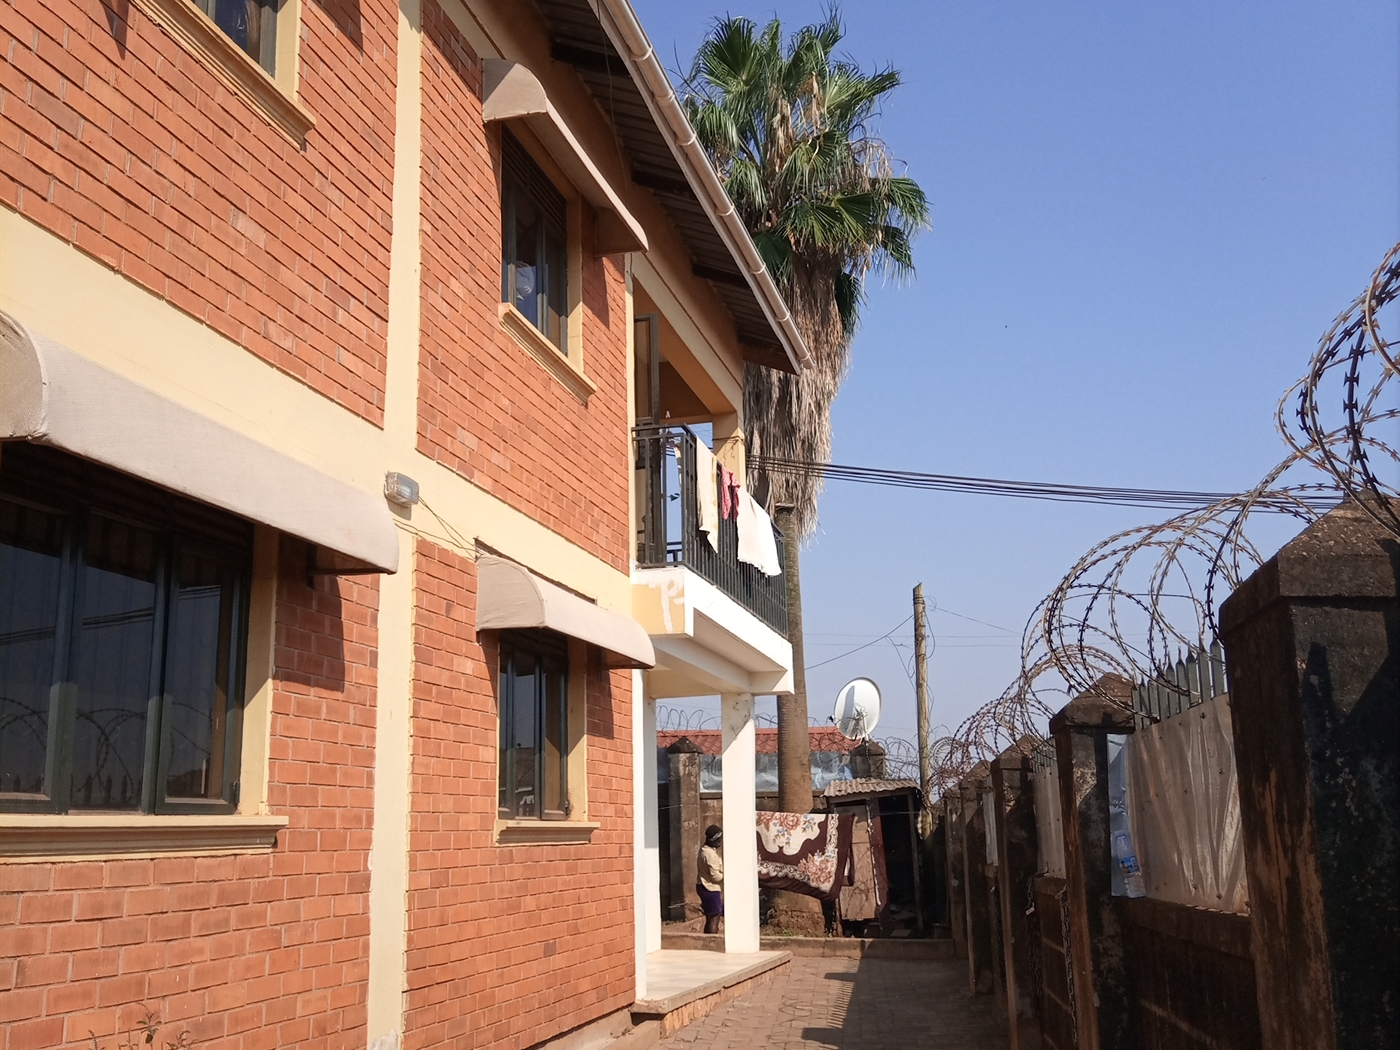 Apartment for rent in Namuwongo Kampala